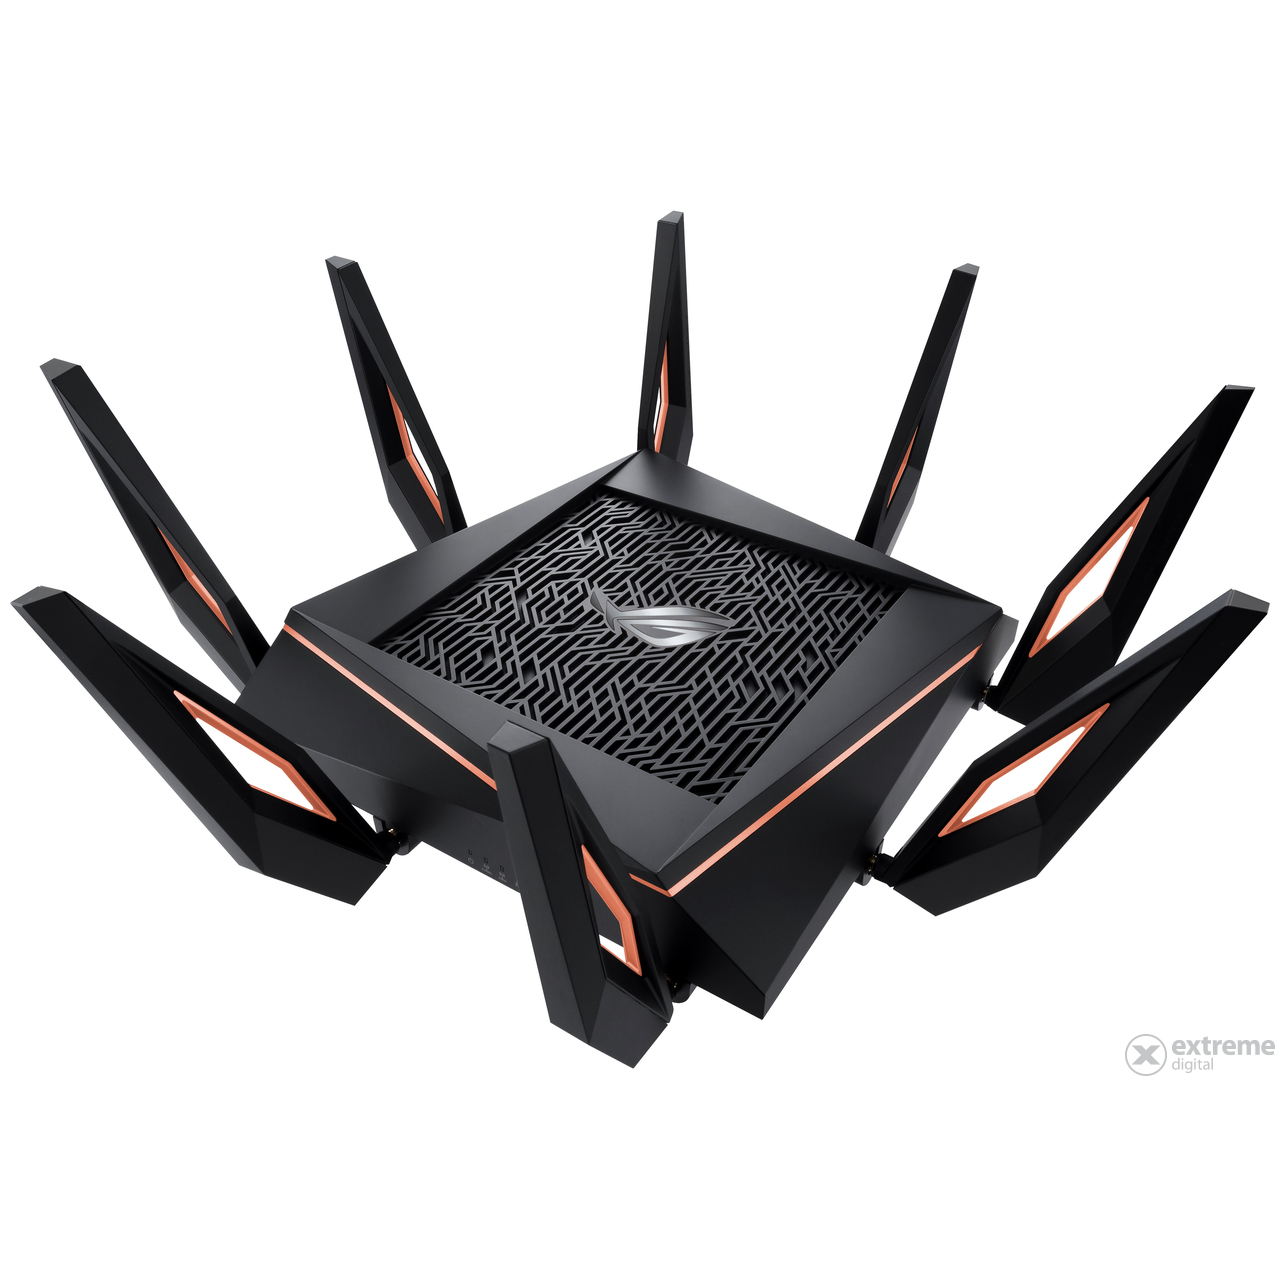 Asus ROG RAPTURE GT-AX11000 AX11000 Mbps Tri-band WiFi 6 gigabit AiMesh OFDMA gaming Wi-Fi router